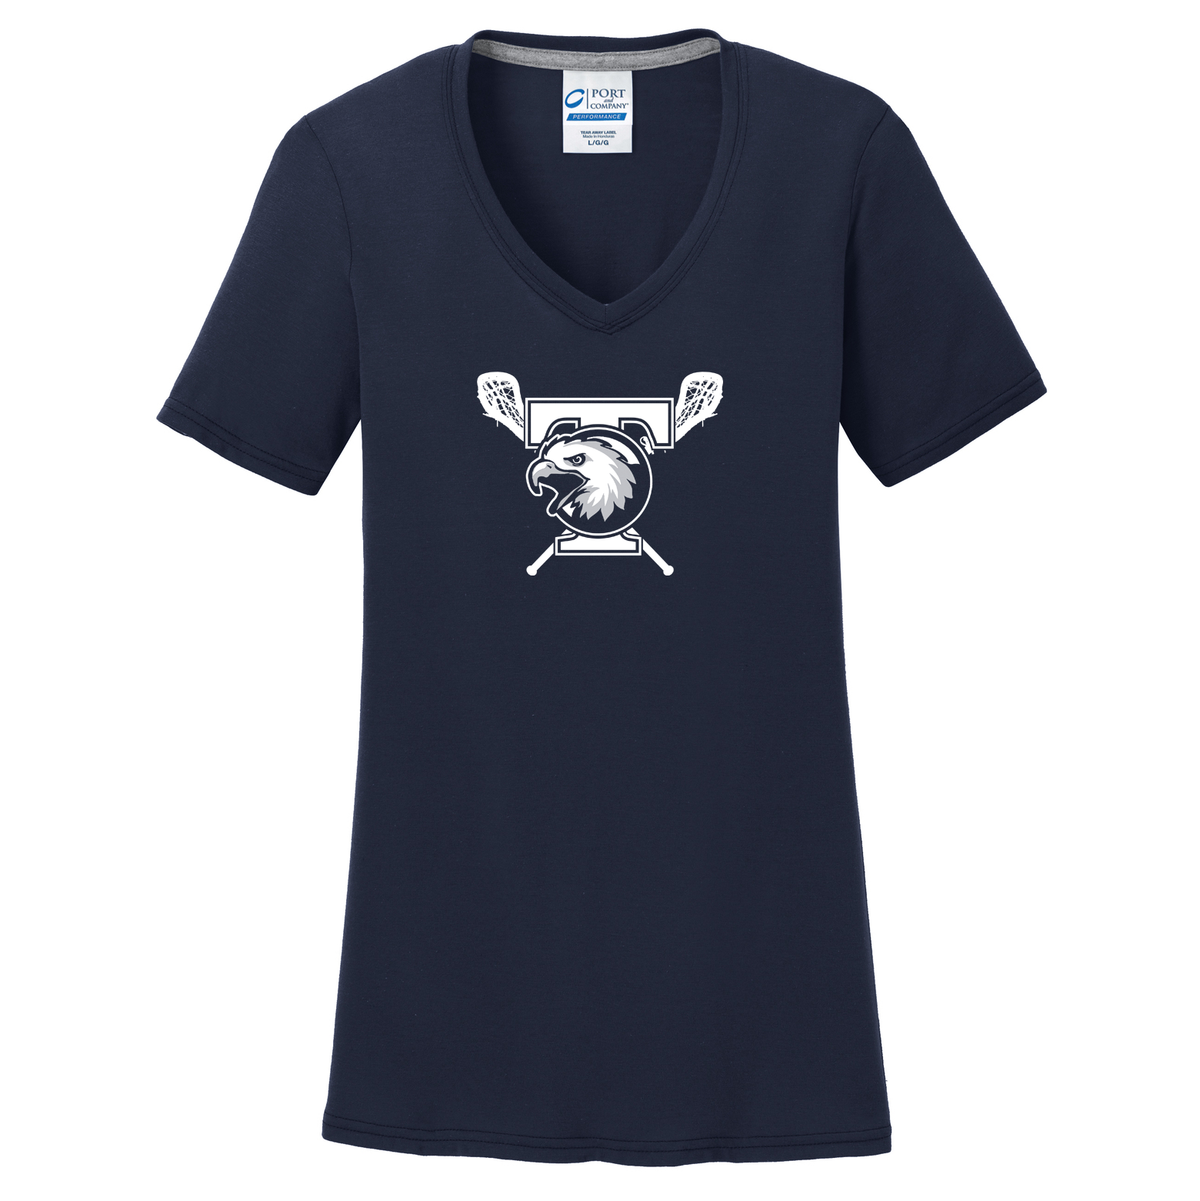 Tolland Lacrosse Club Women's T-Shirt